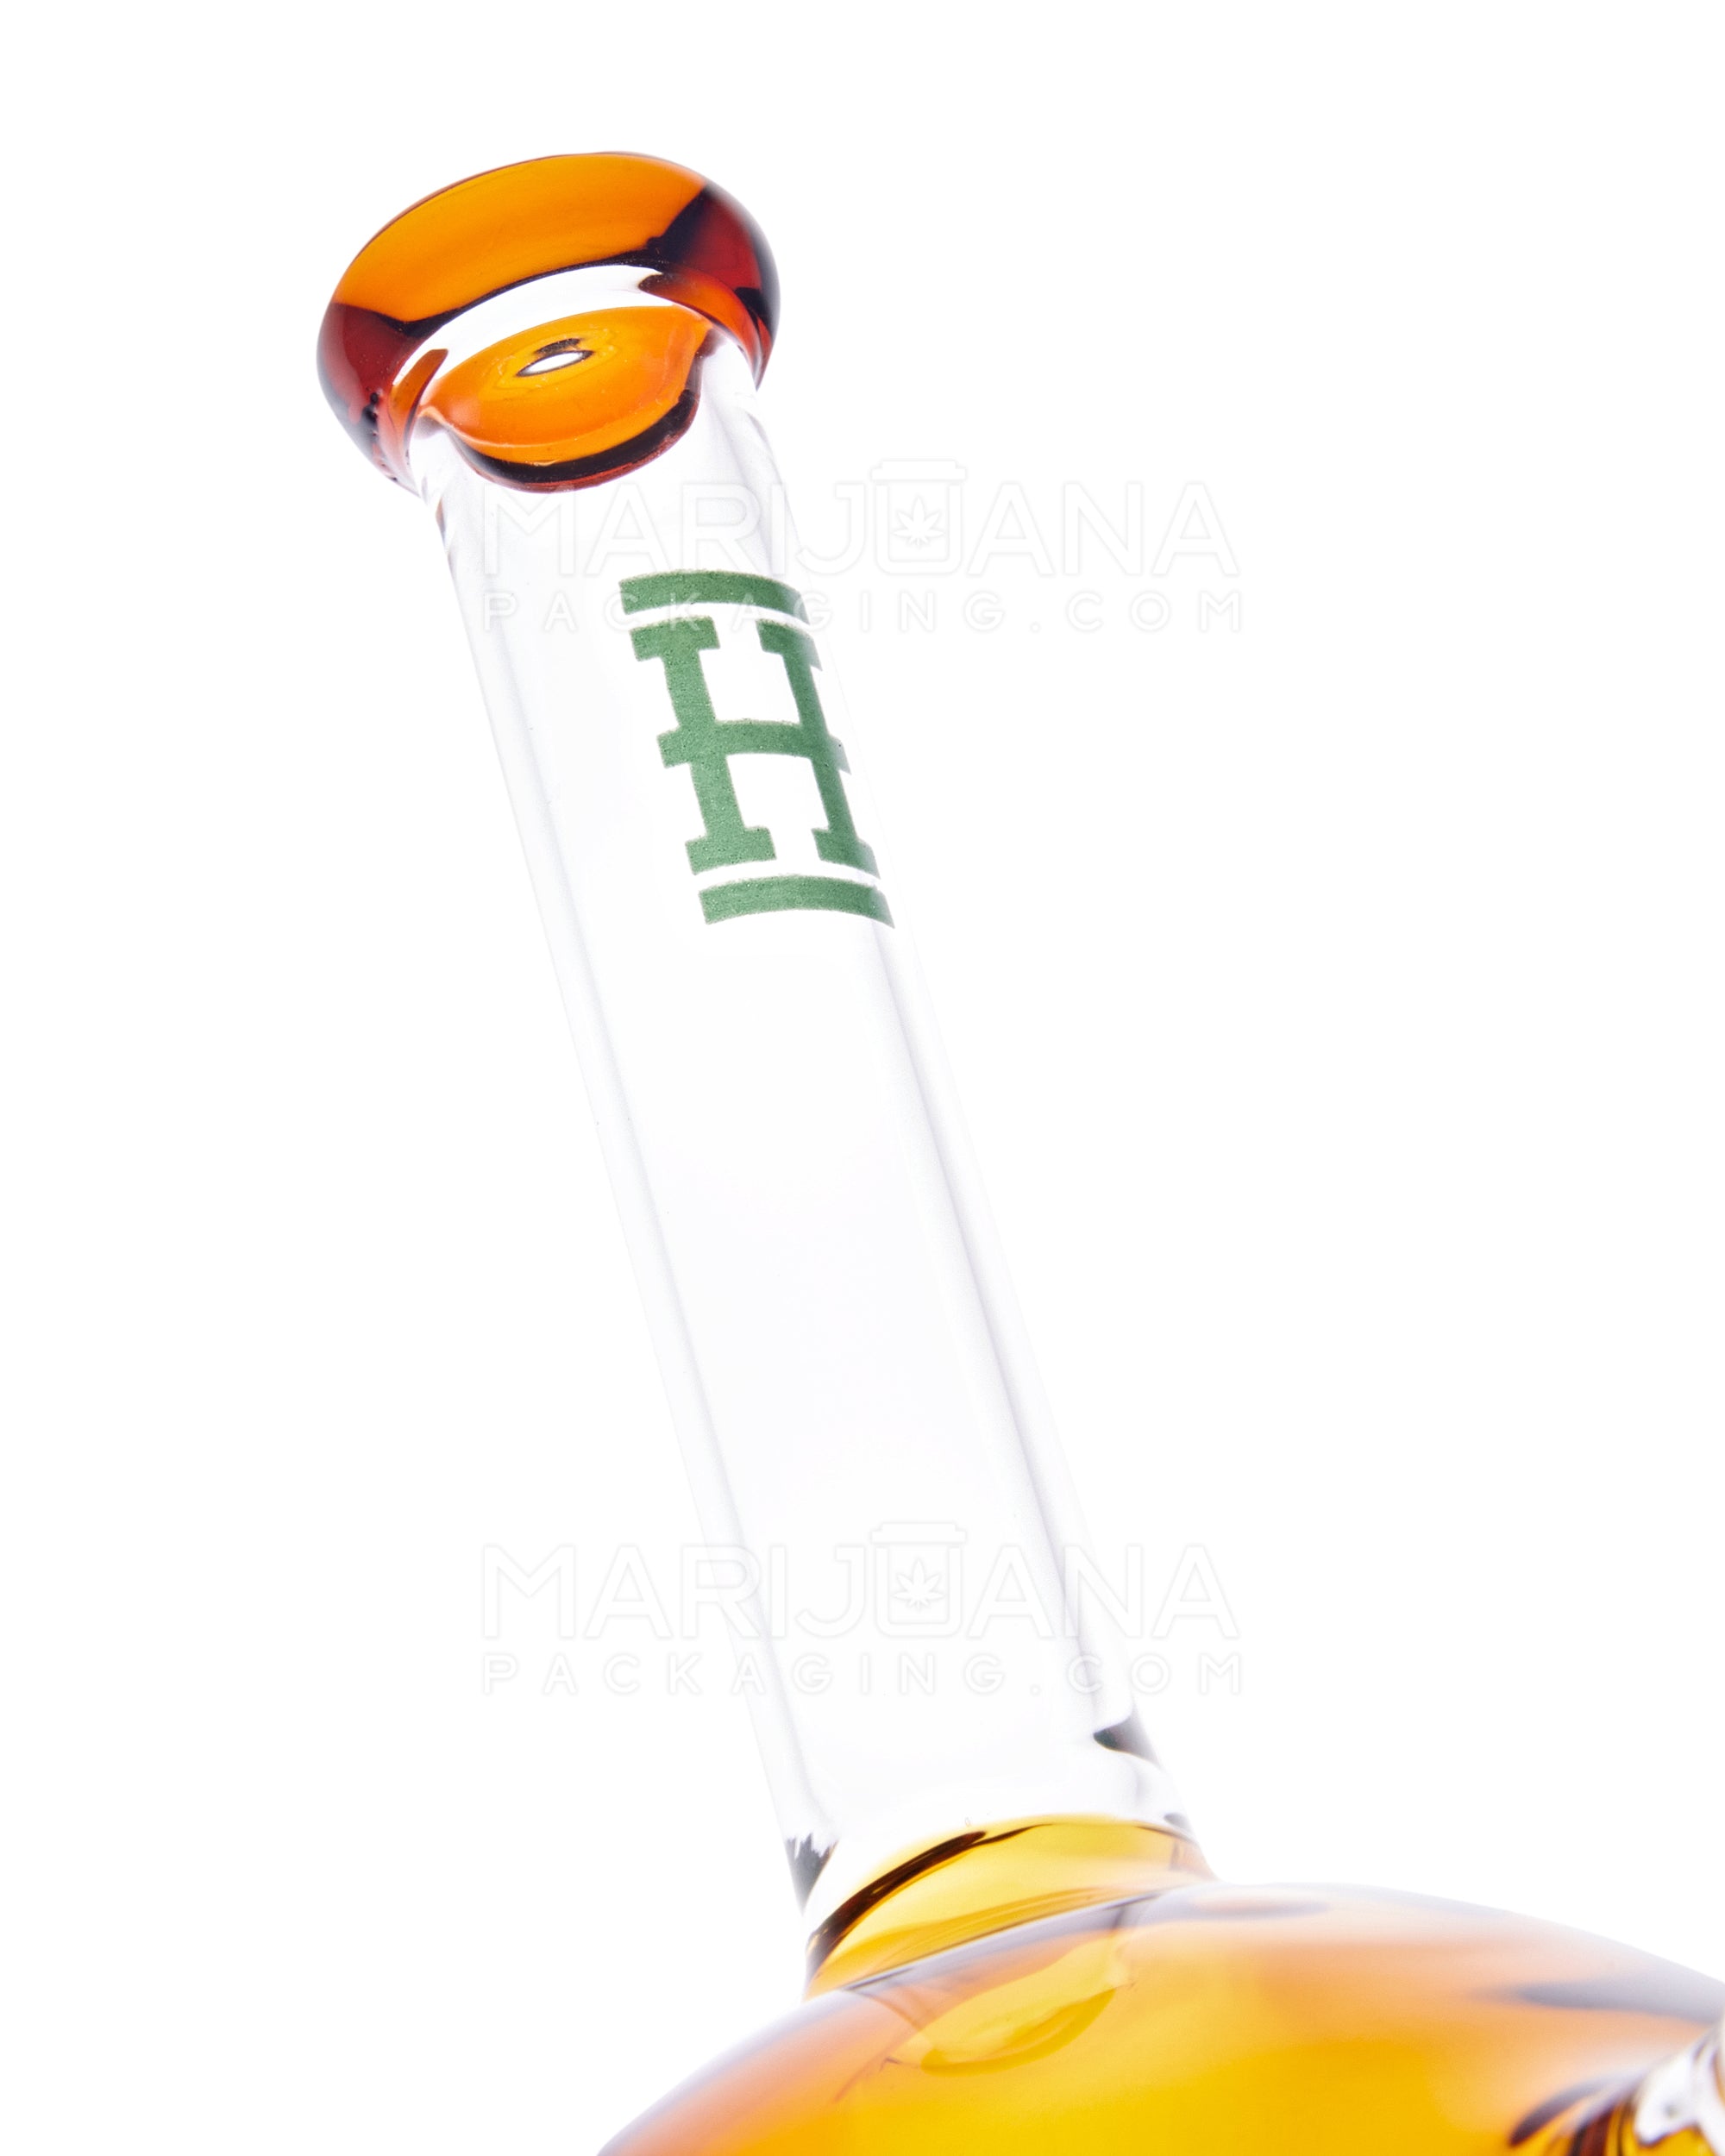 HEMPER | Wish Ball Mini Glass Water Pipe | 7in Tall - 14mm Bowl - Assorted